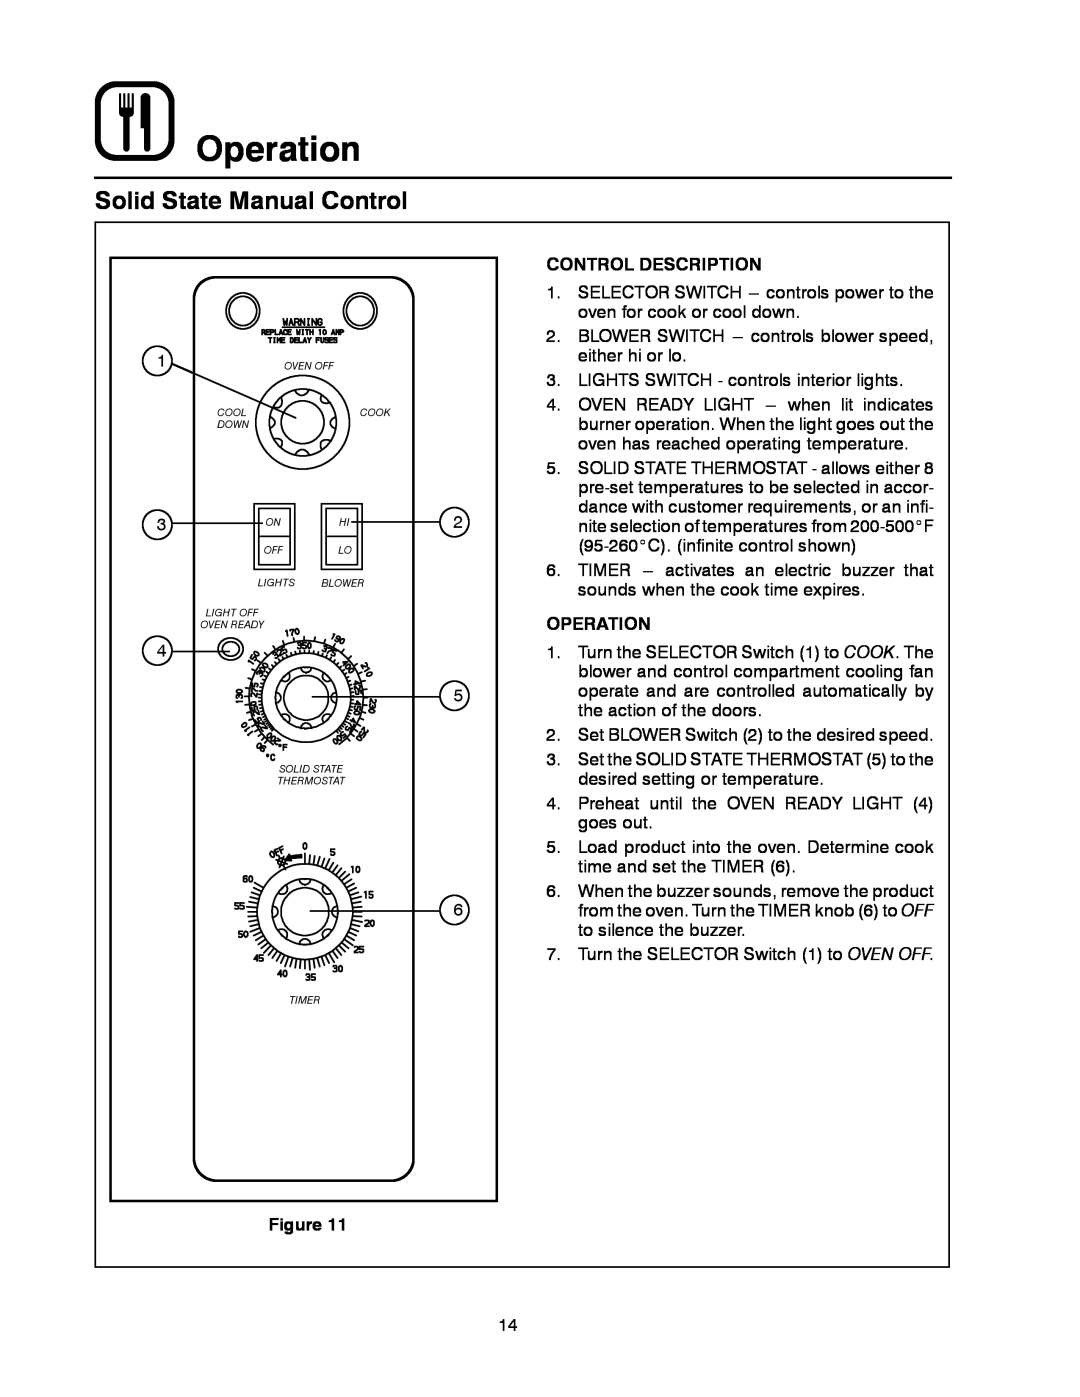 Blodgett MARK V manual Operation, Solid State Manual Control, Control Description 